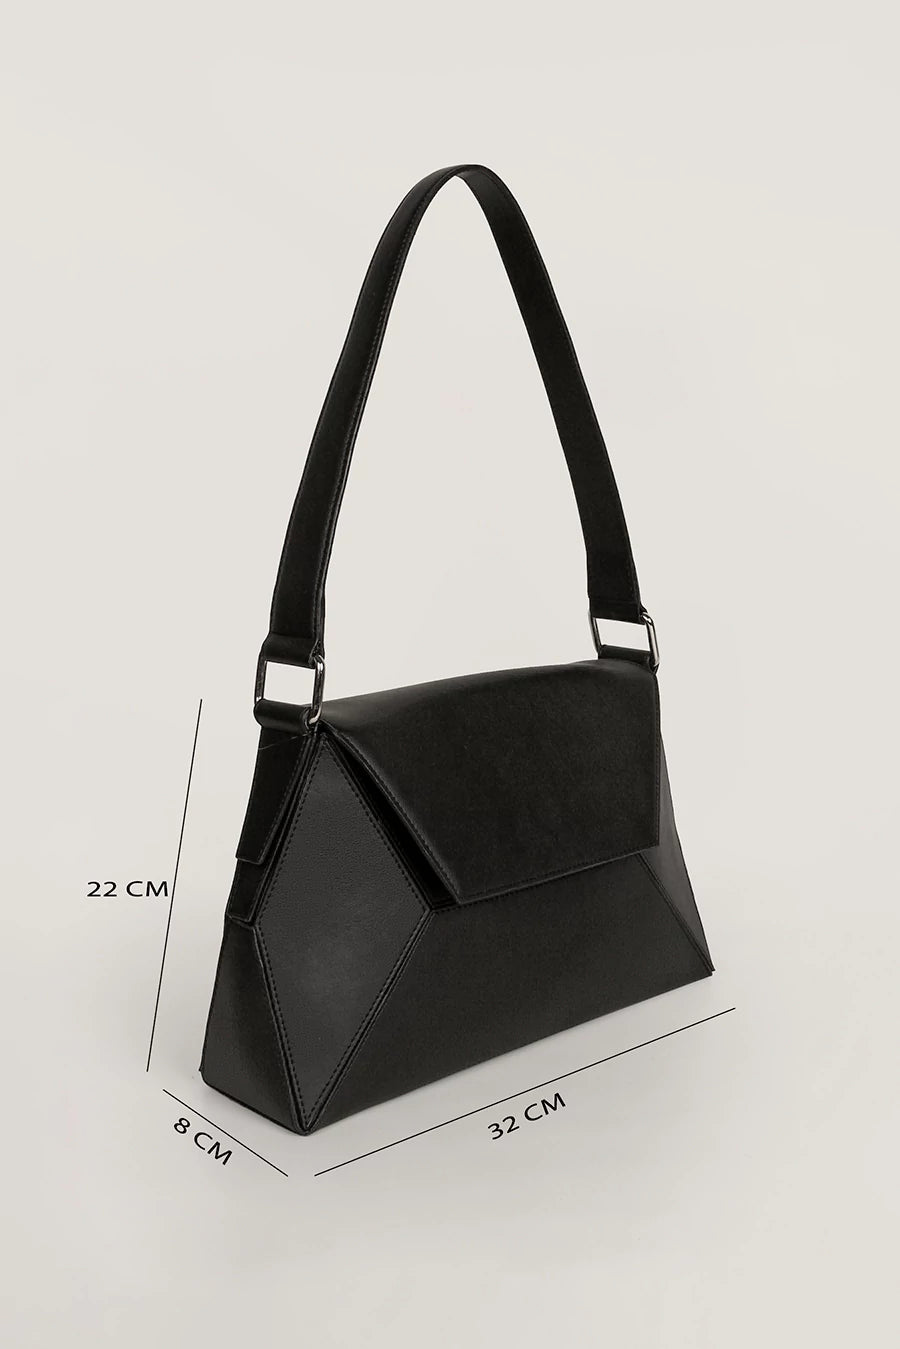 Hazel Vegan Leather Handbag